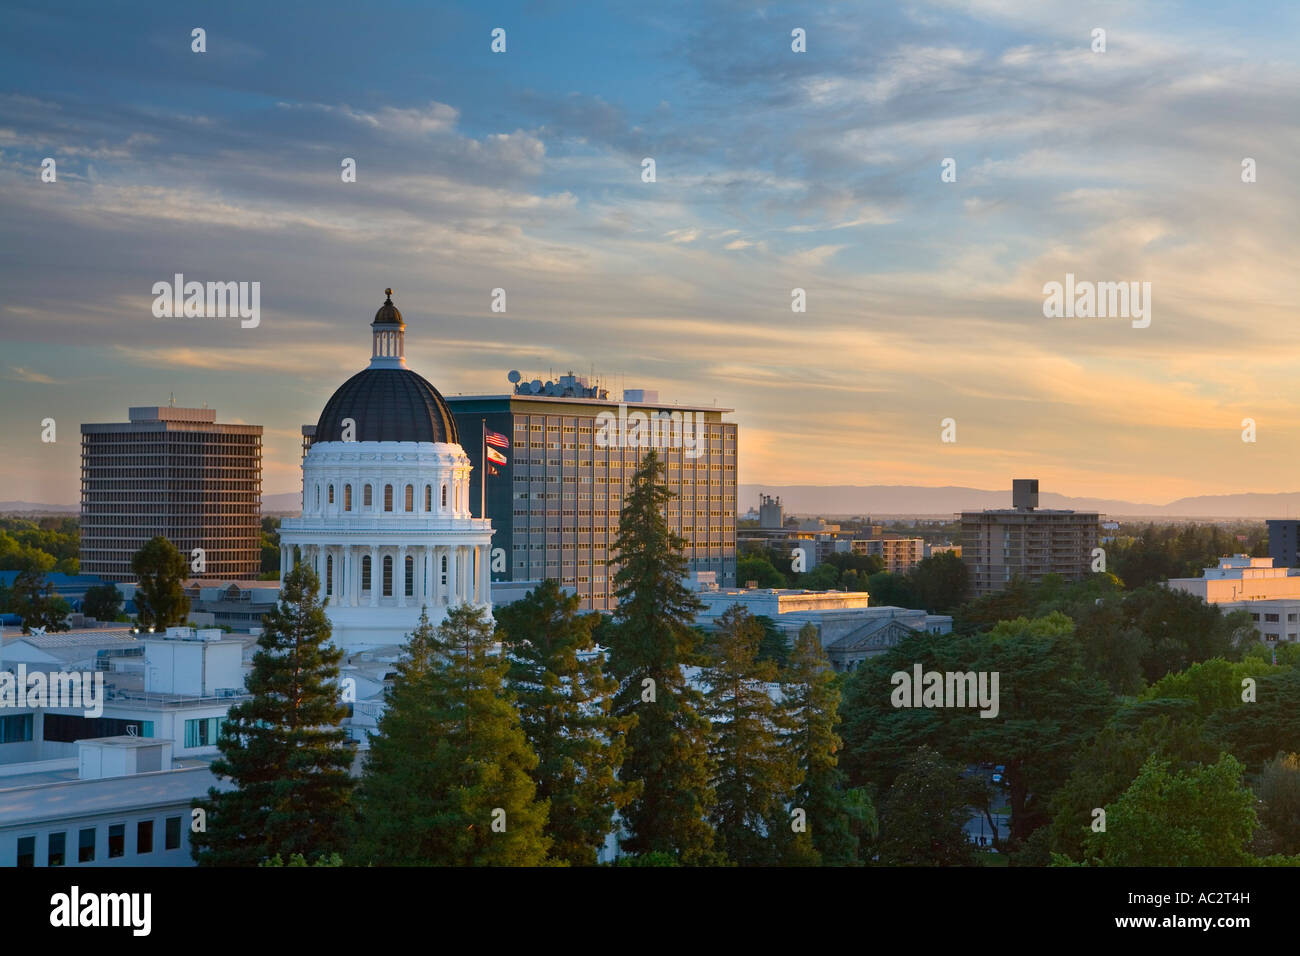 The California State Capitol building at sunset, Sacramento, California. Stock Photo